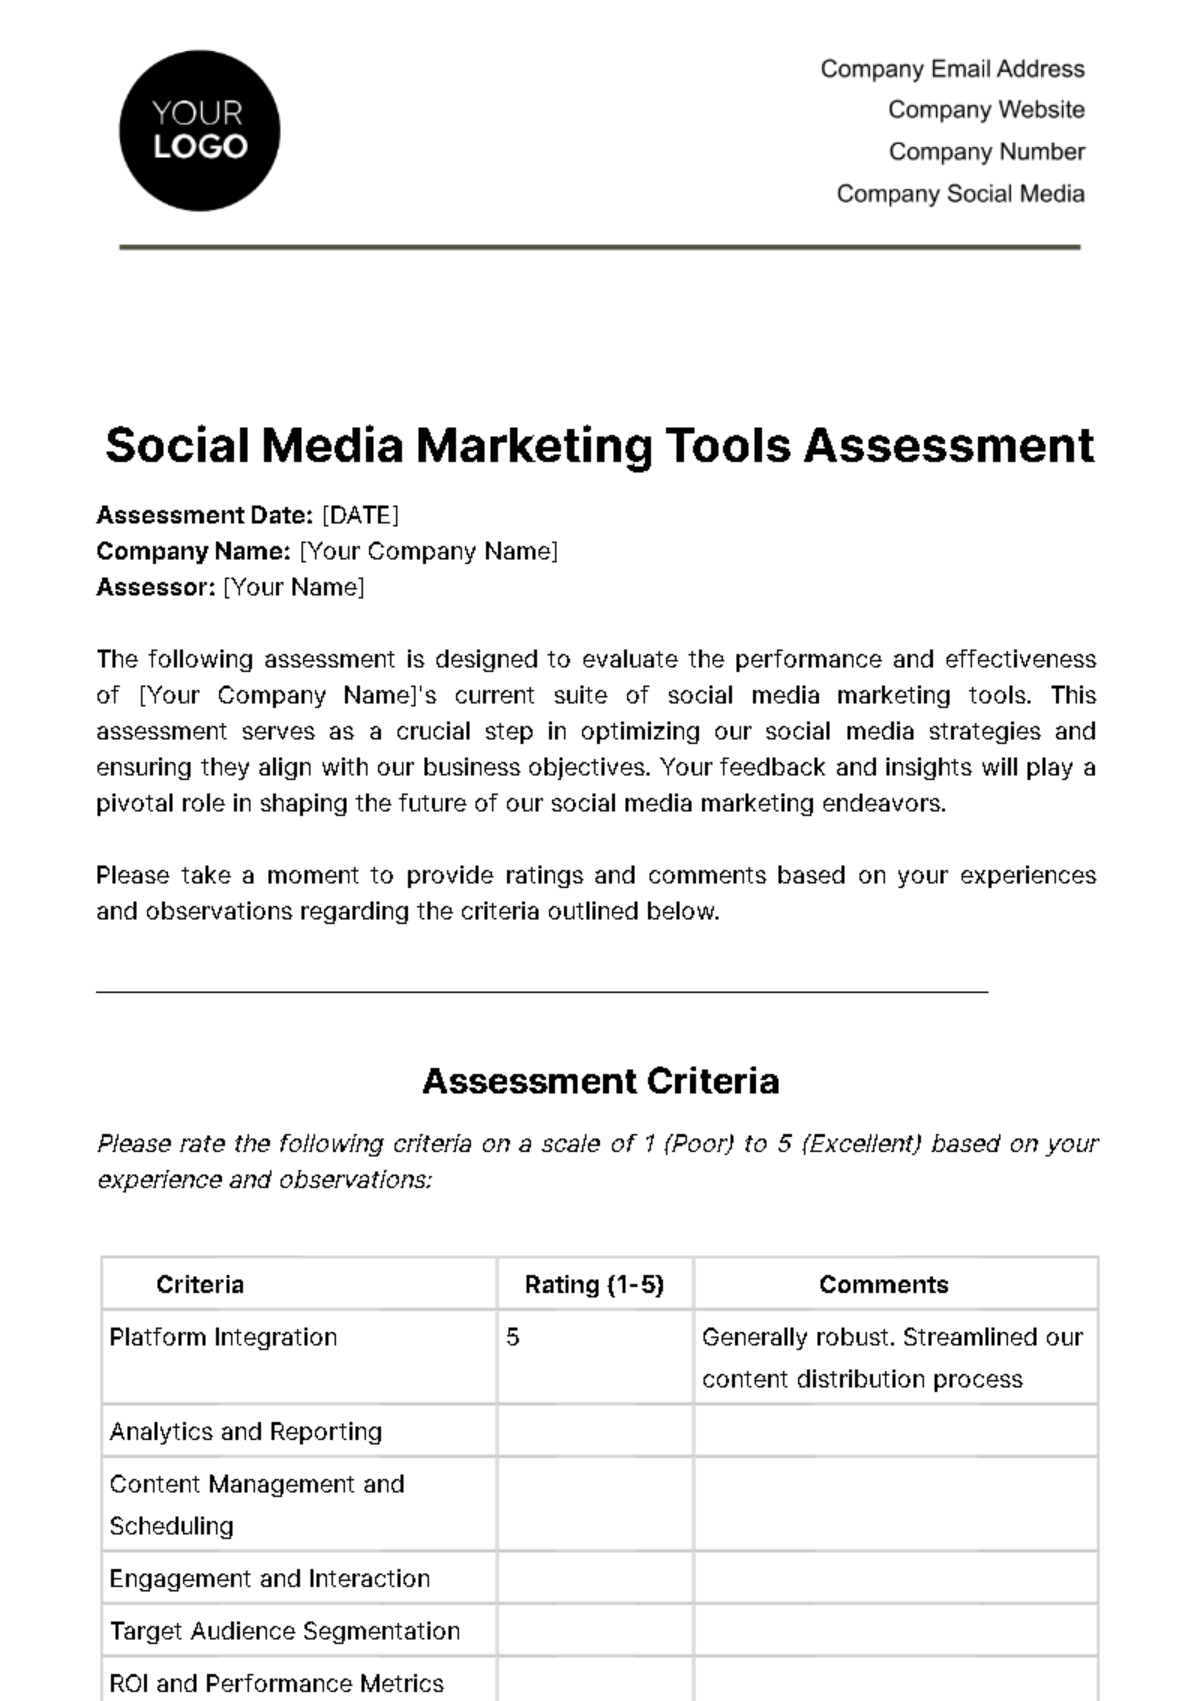 Social Media Marketing Tools Assessment Template